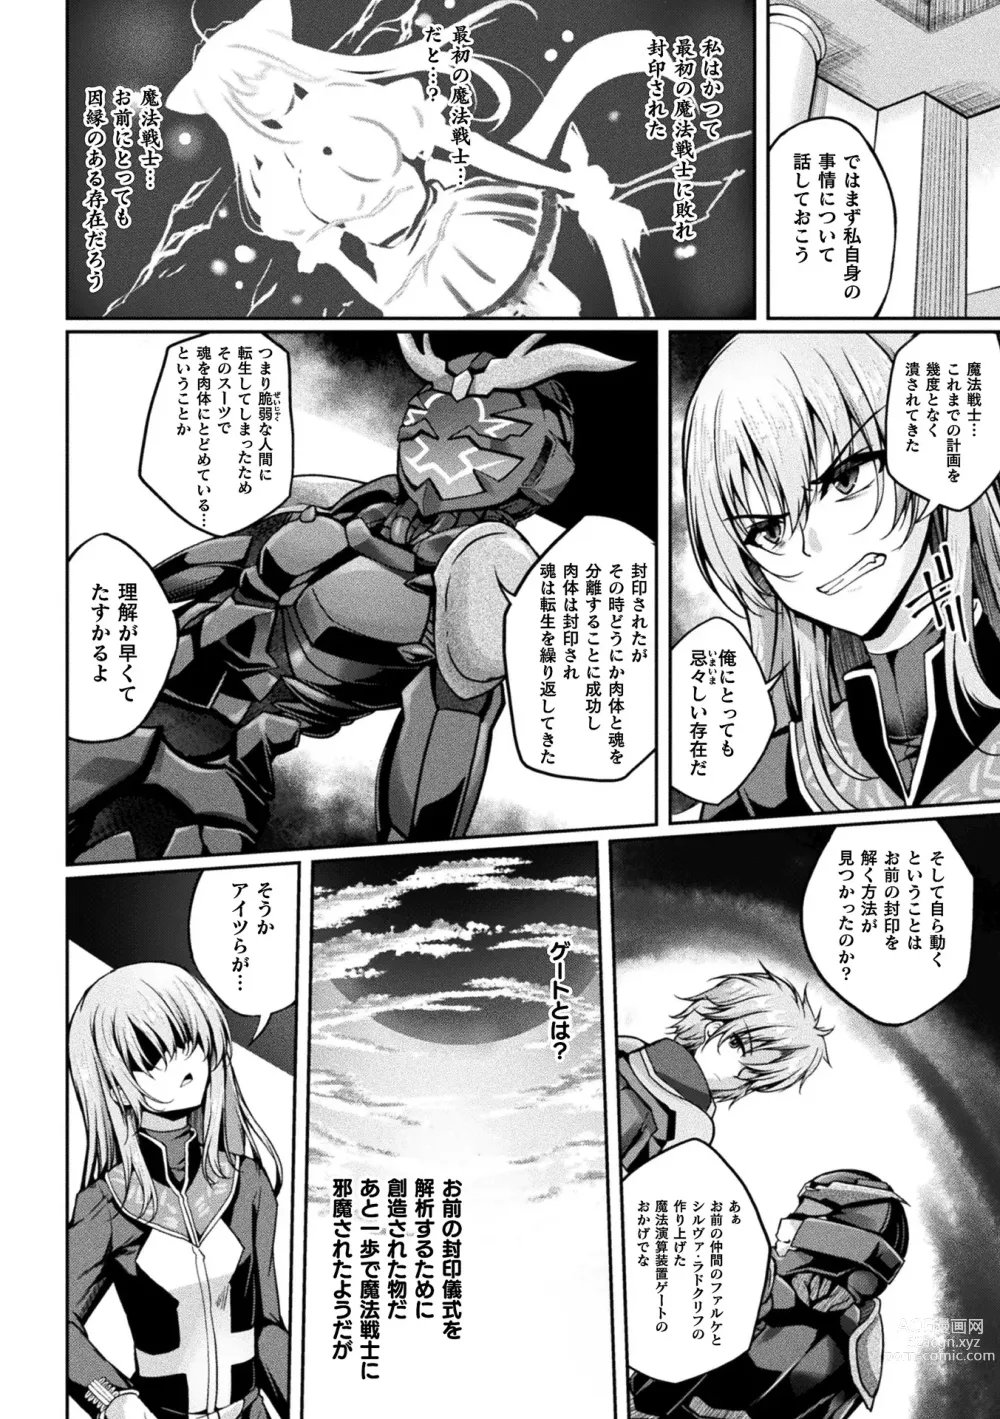 Page 10 of manga Kukkoro Heroines Vol. 33